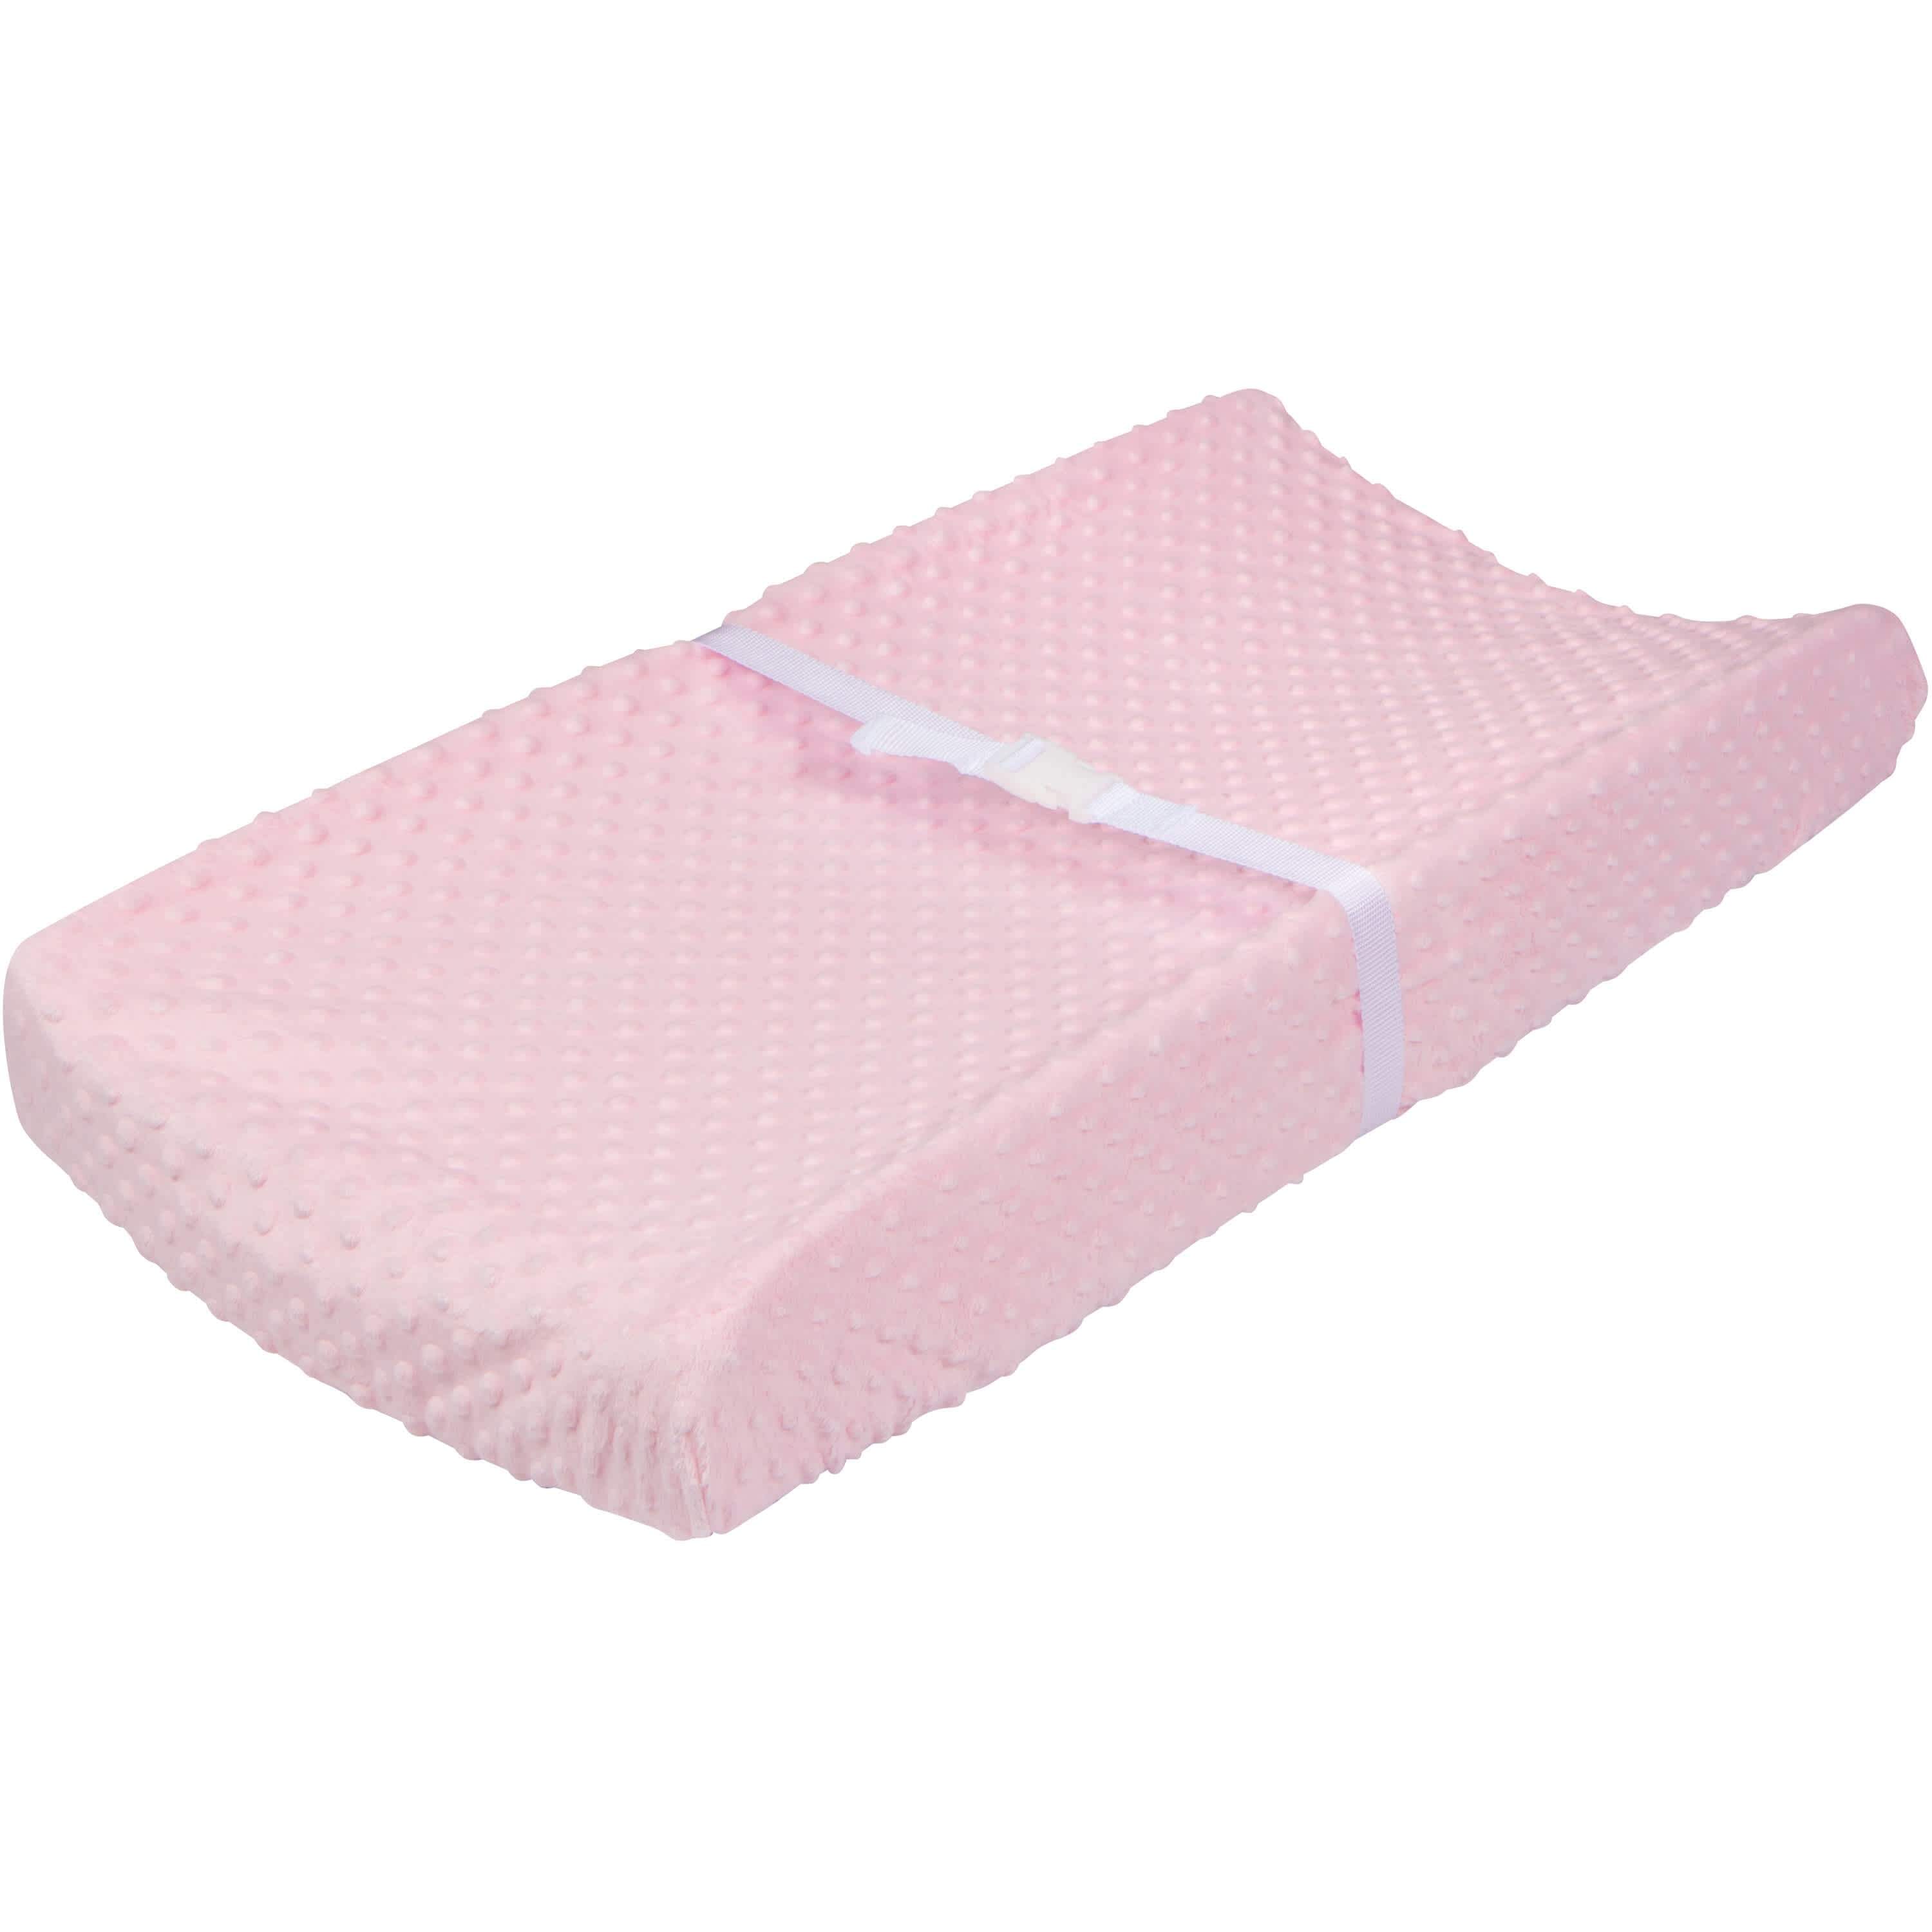 PinkTober Pad Case *read description* – Pretty Collection 2k21